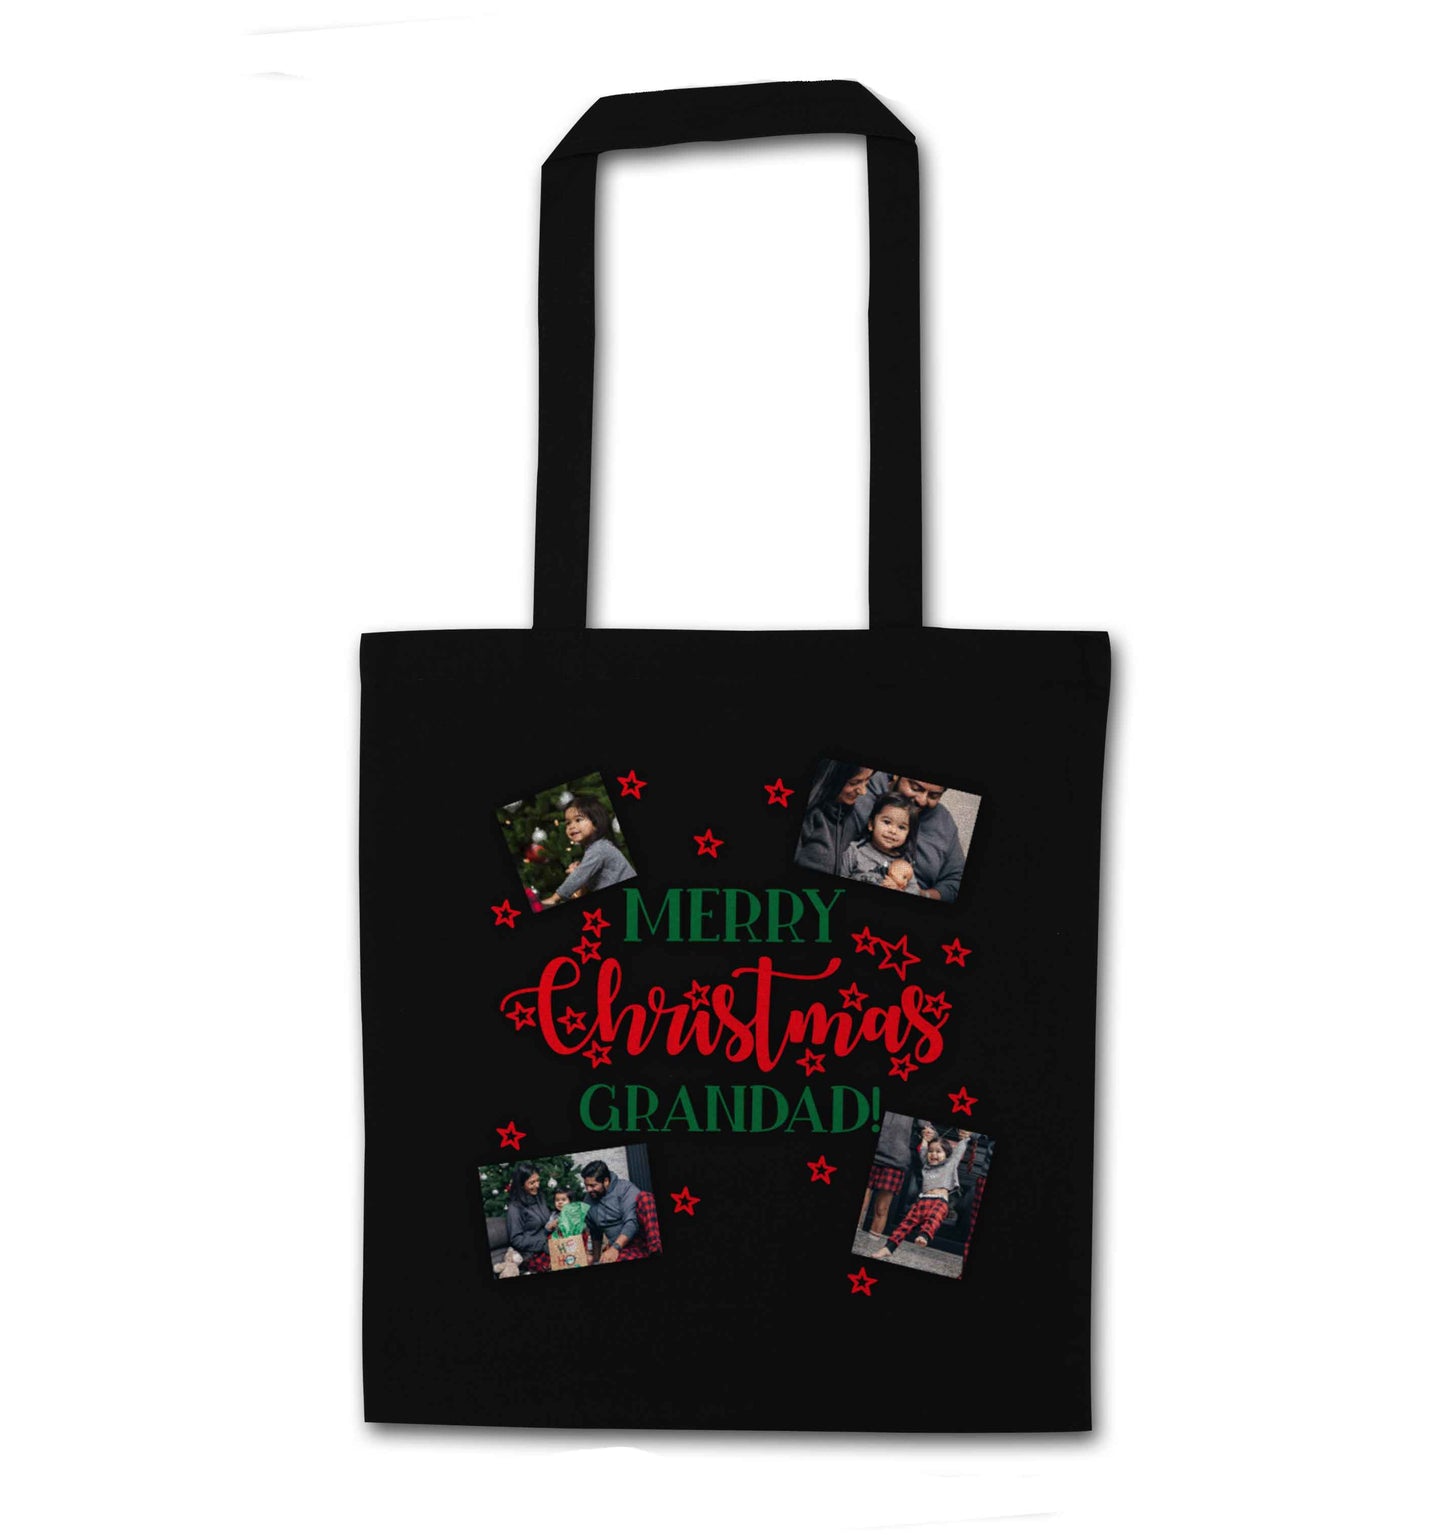 Merry Christmas grandad black tote bag